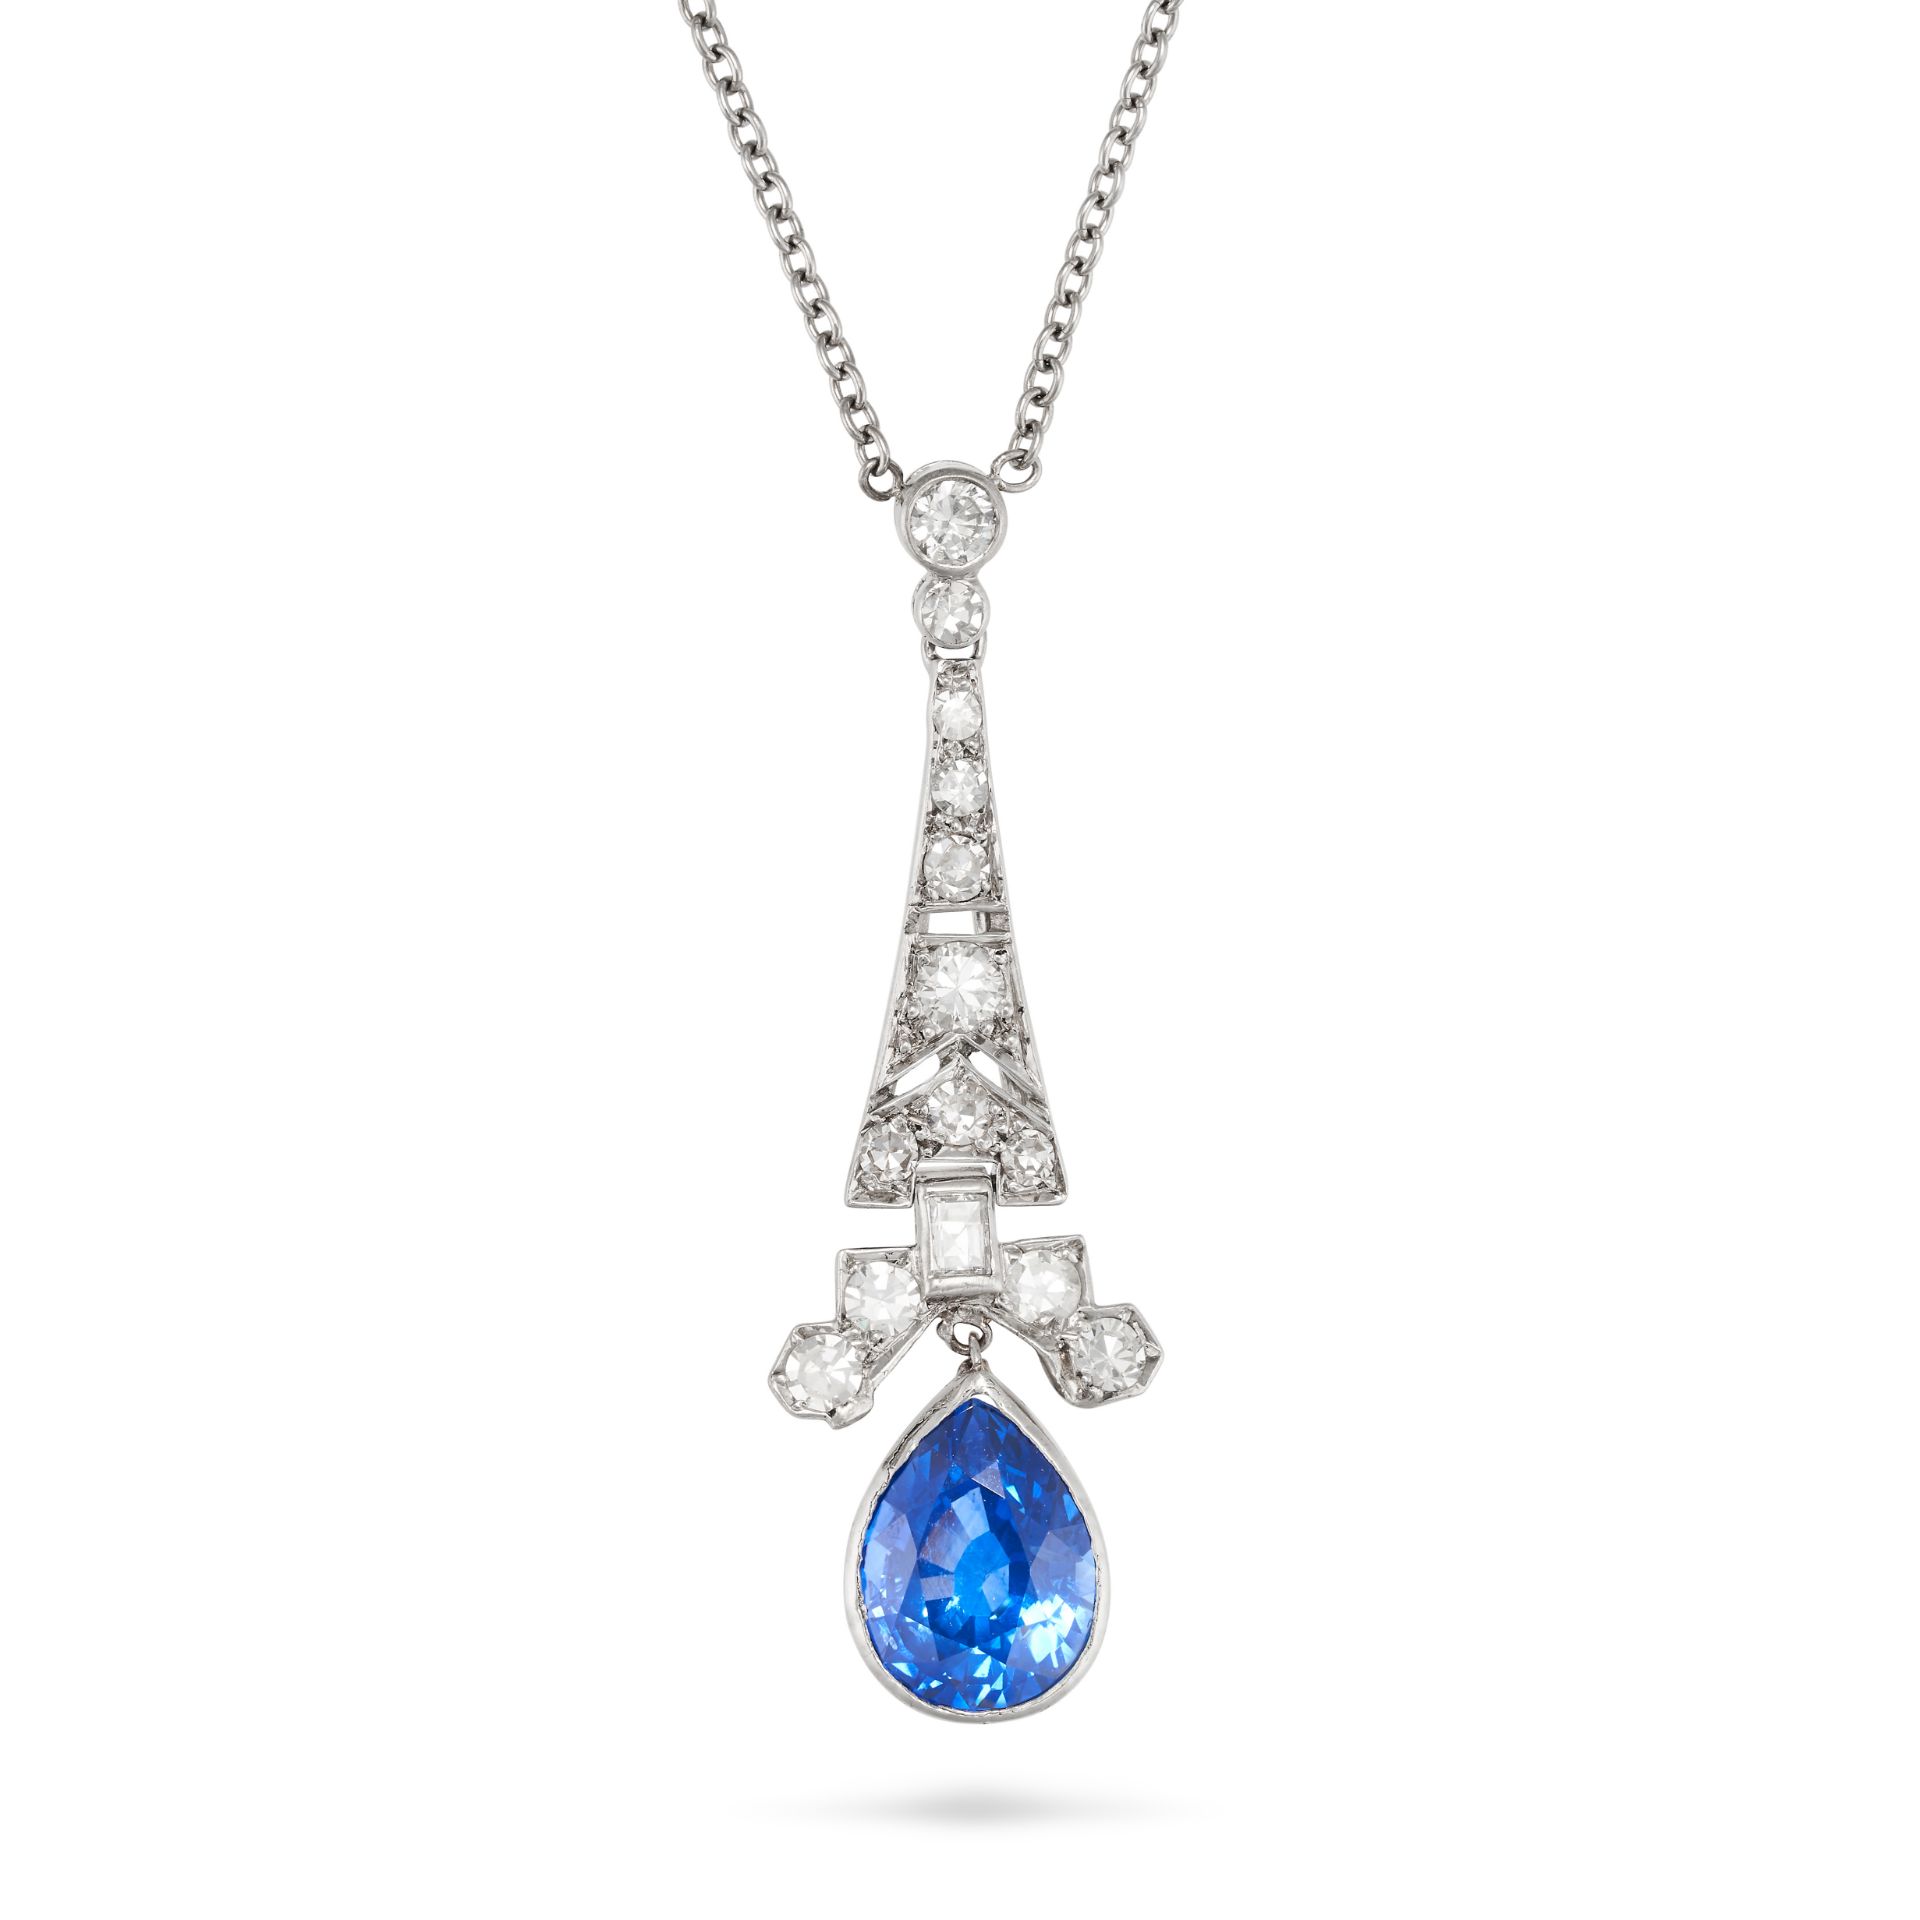 A SAPPHIRE AND DIAMOND PENDANT NECKLACE the pendant set with single and baguette cut diamonds, su...